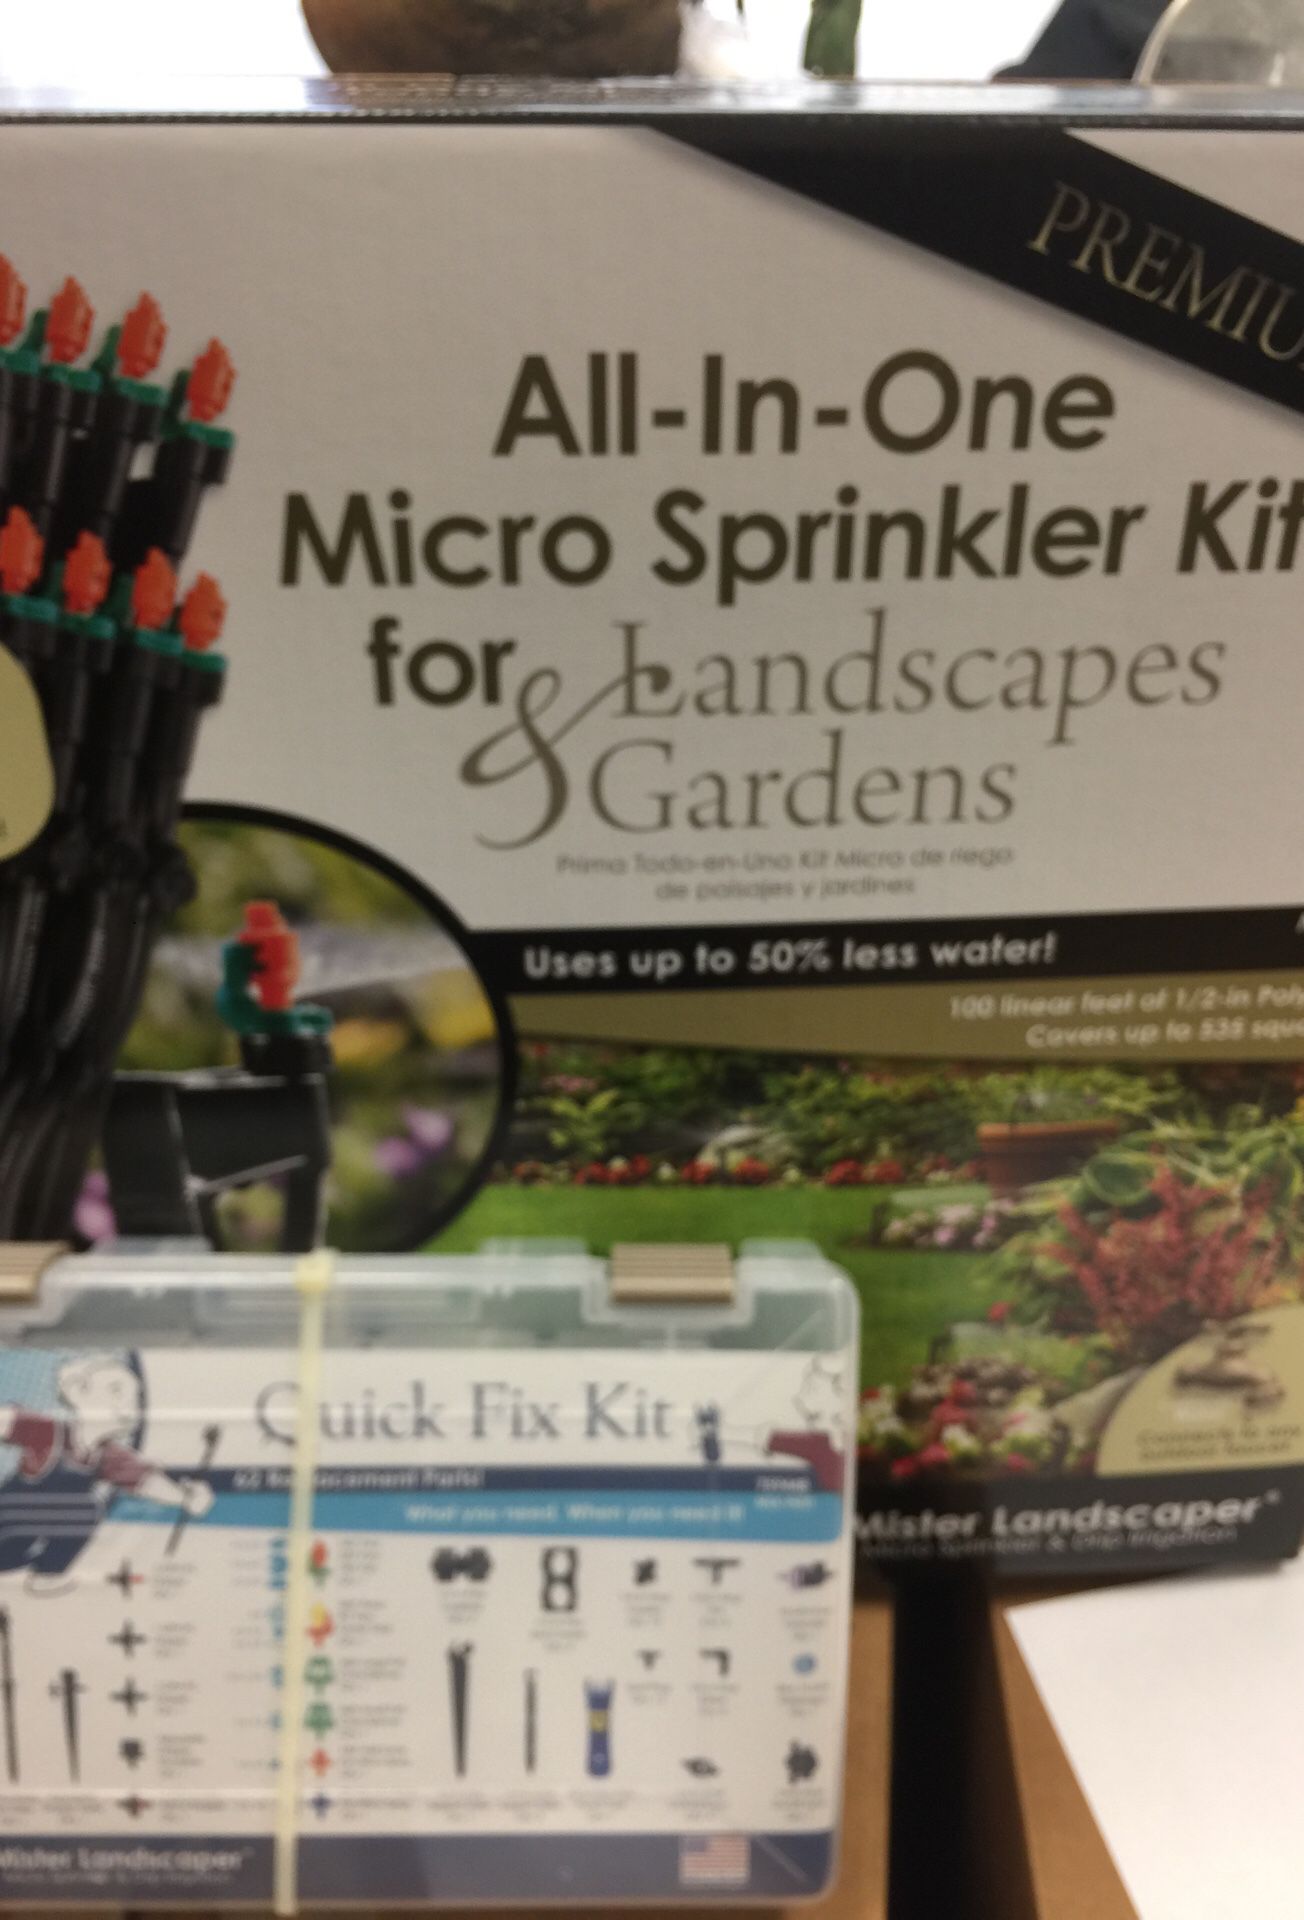 Mister Landscaper All-In-One Micro Sprinkler & Drip Irrigation for Landscapes & Gardens & Quick Fix Kit